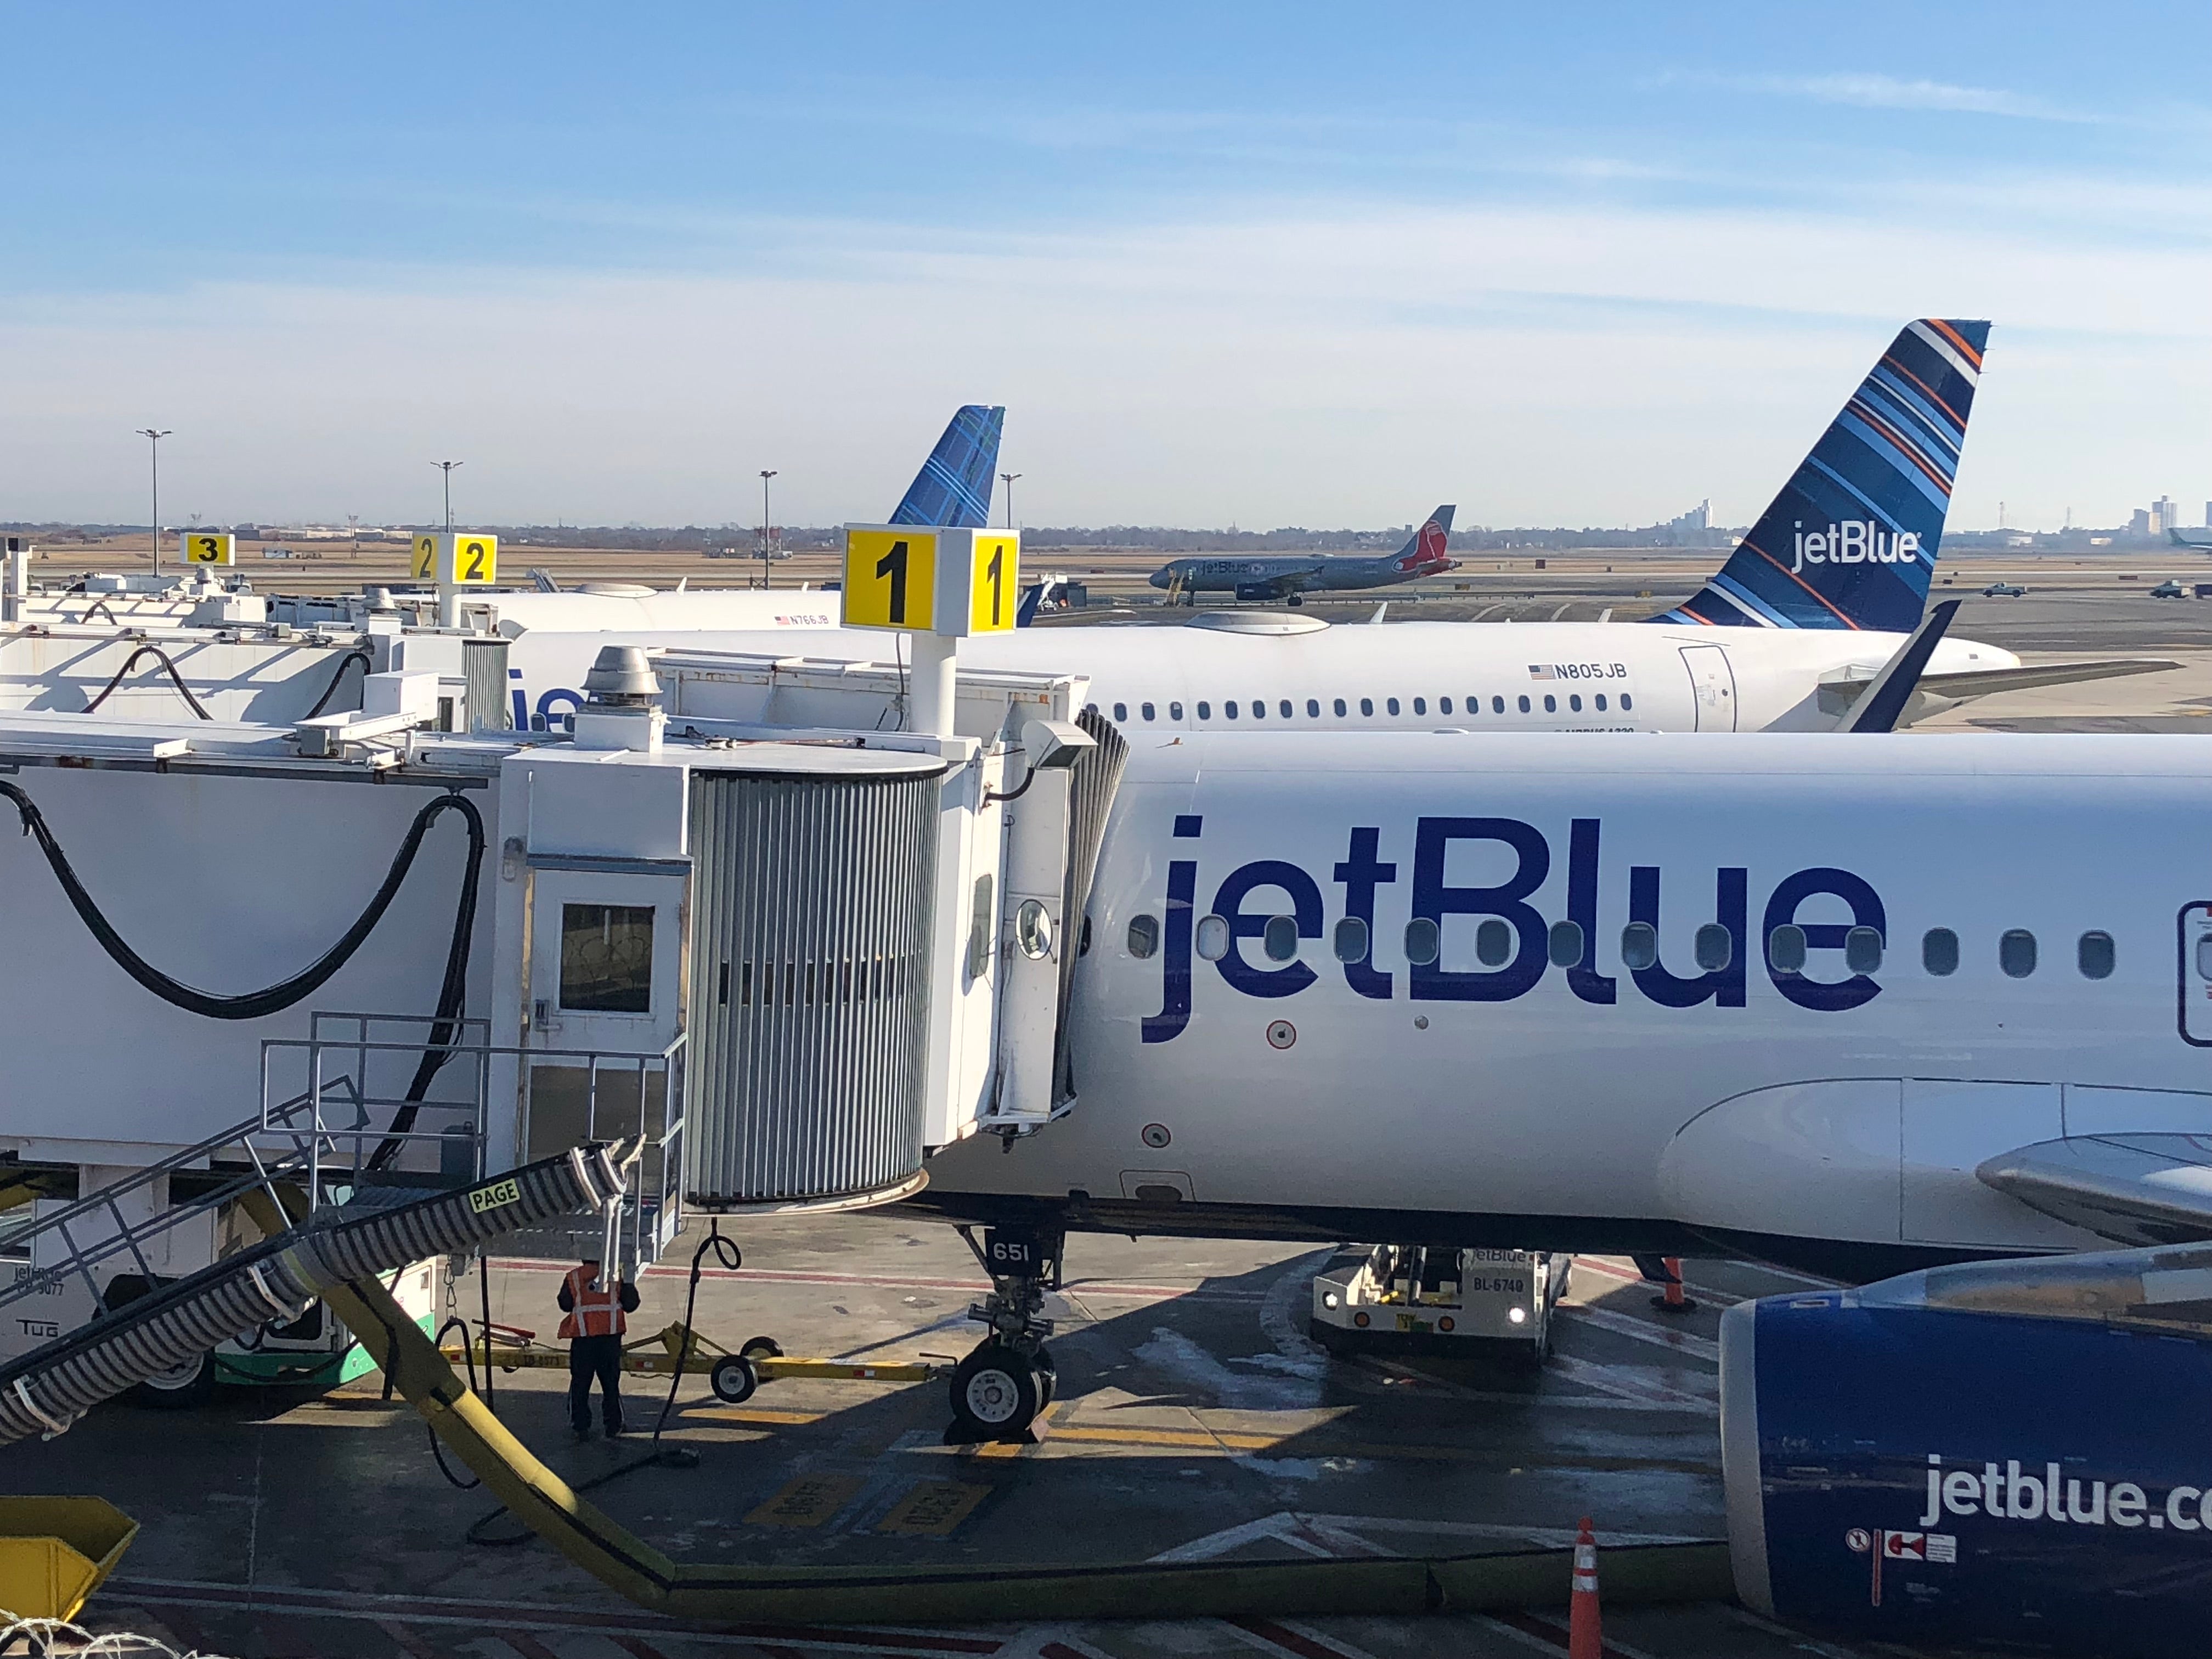 London-bound: jetBlue aircraft at New York JFK airport